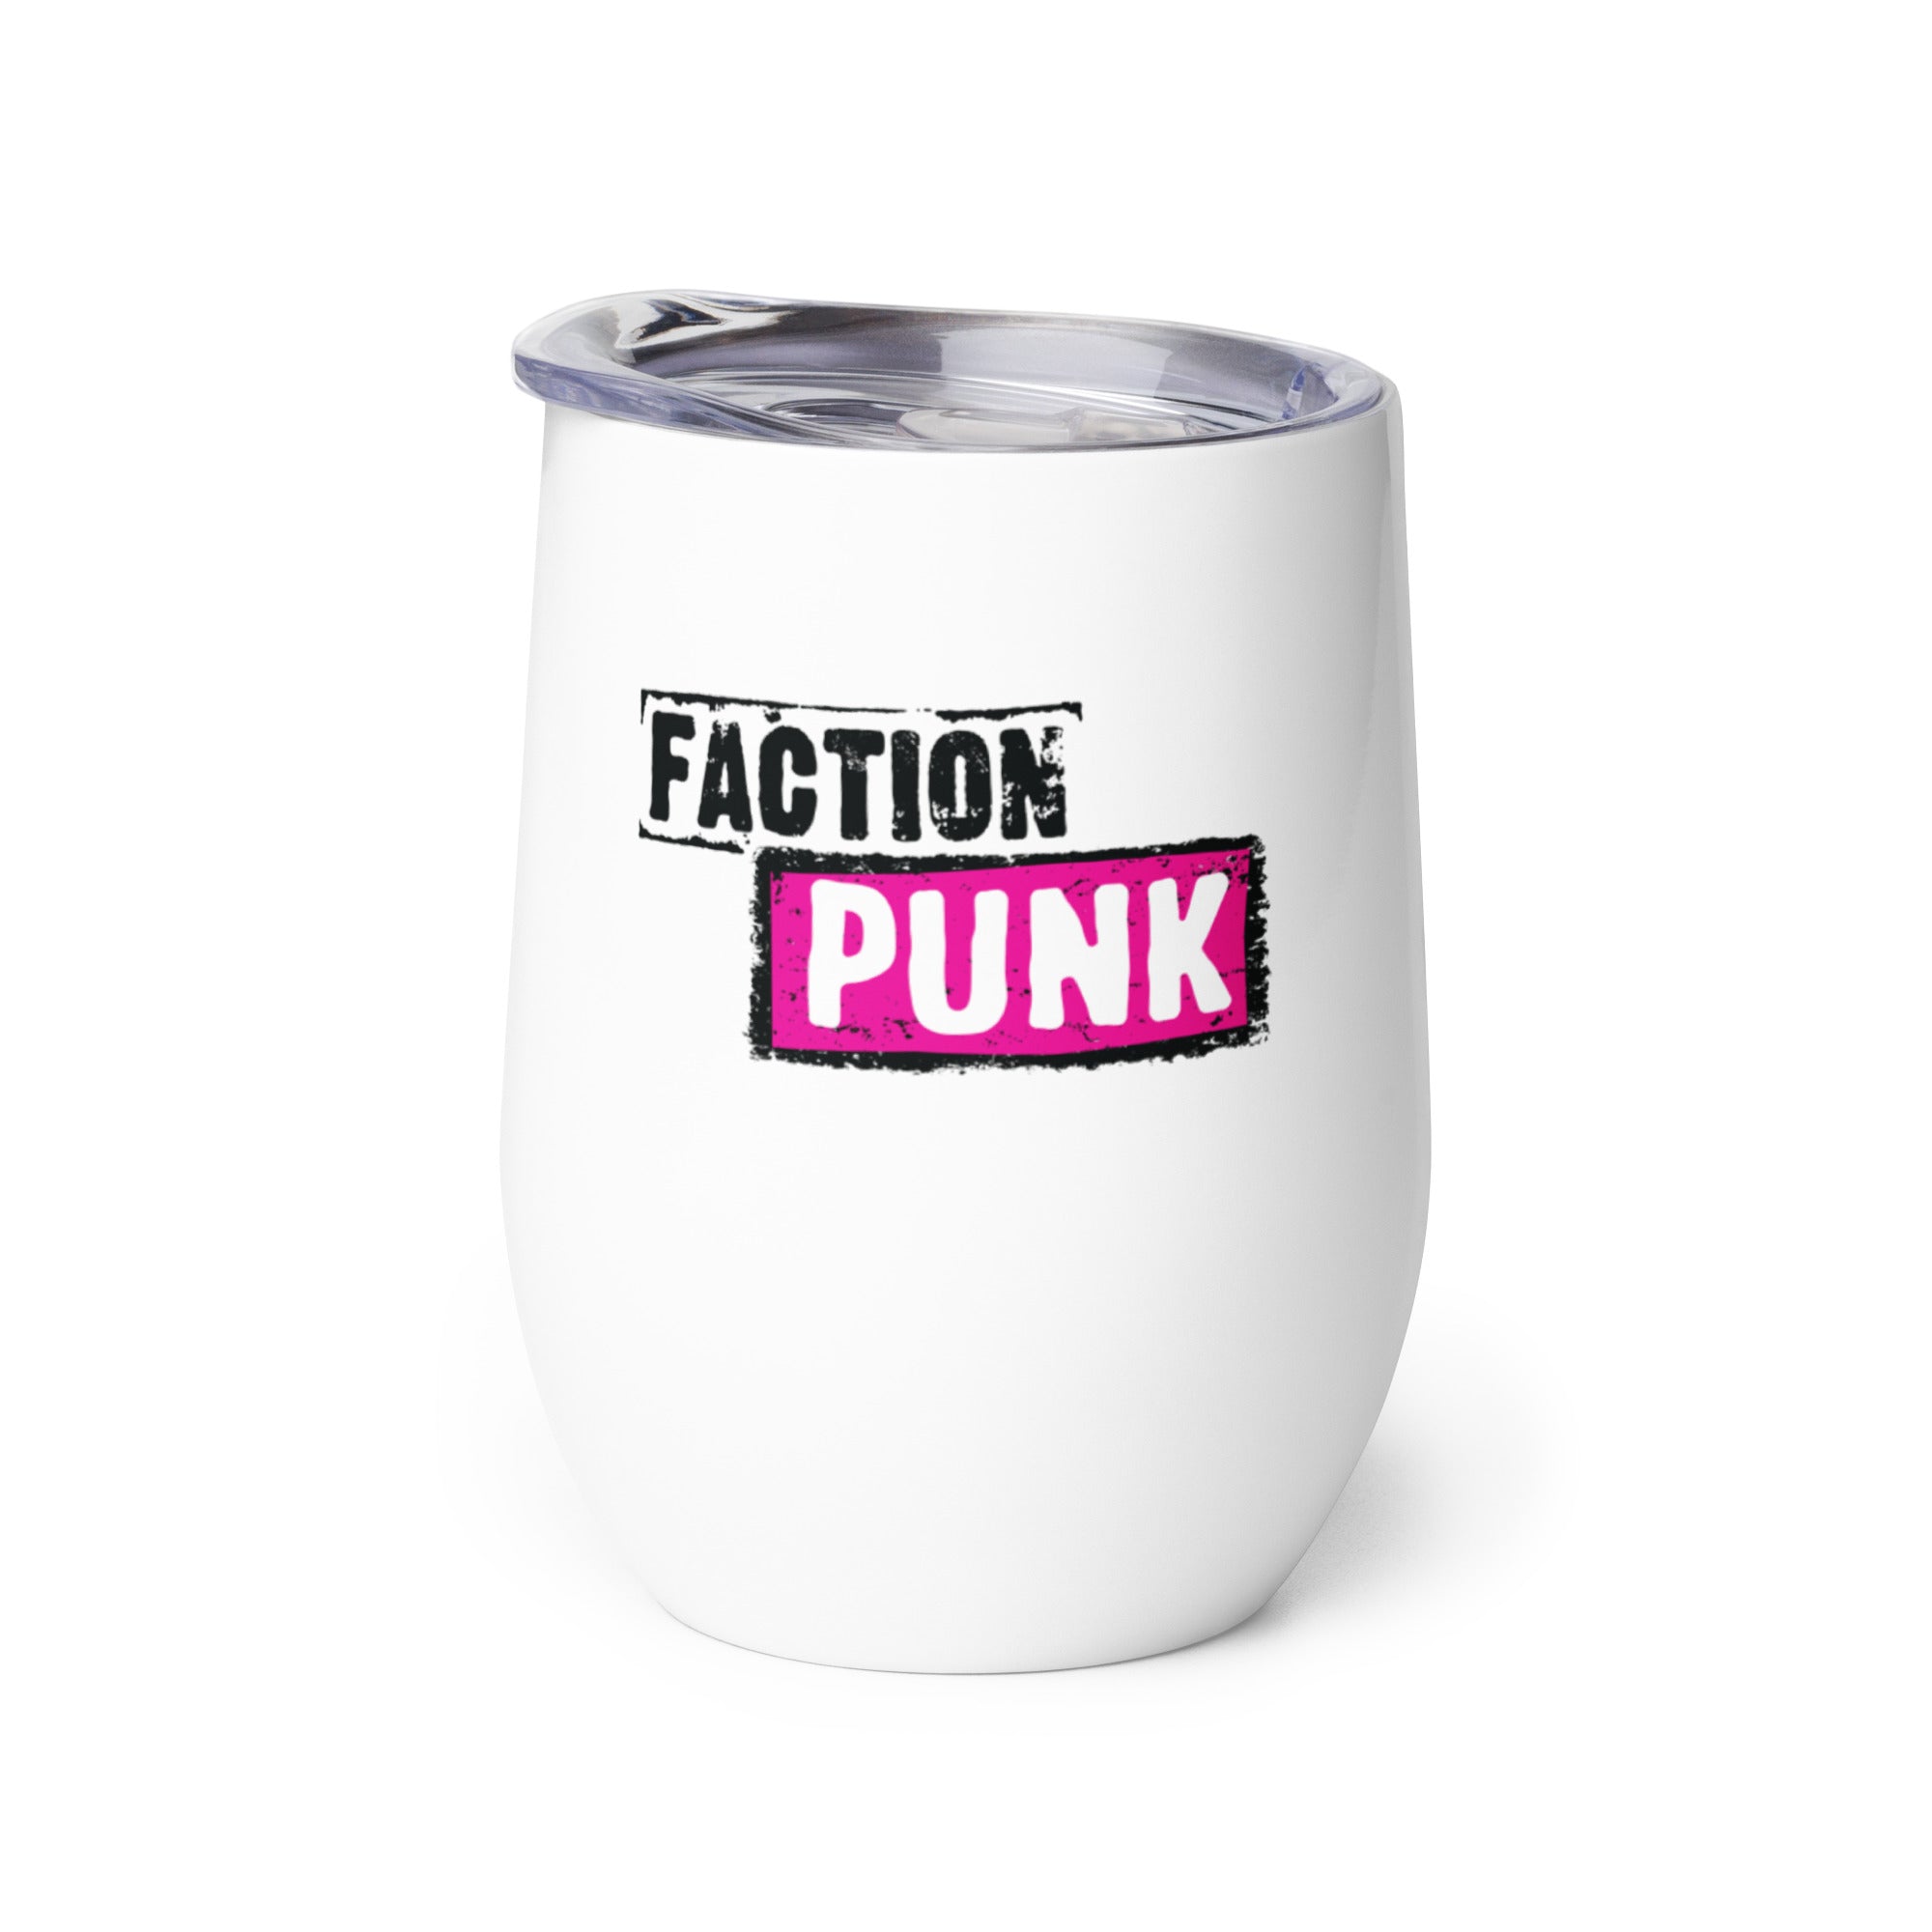 Faction Punk: Wine Tumbler